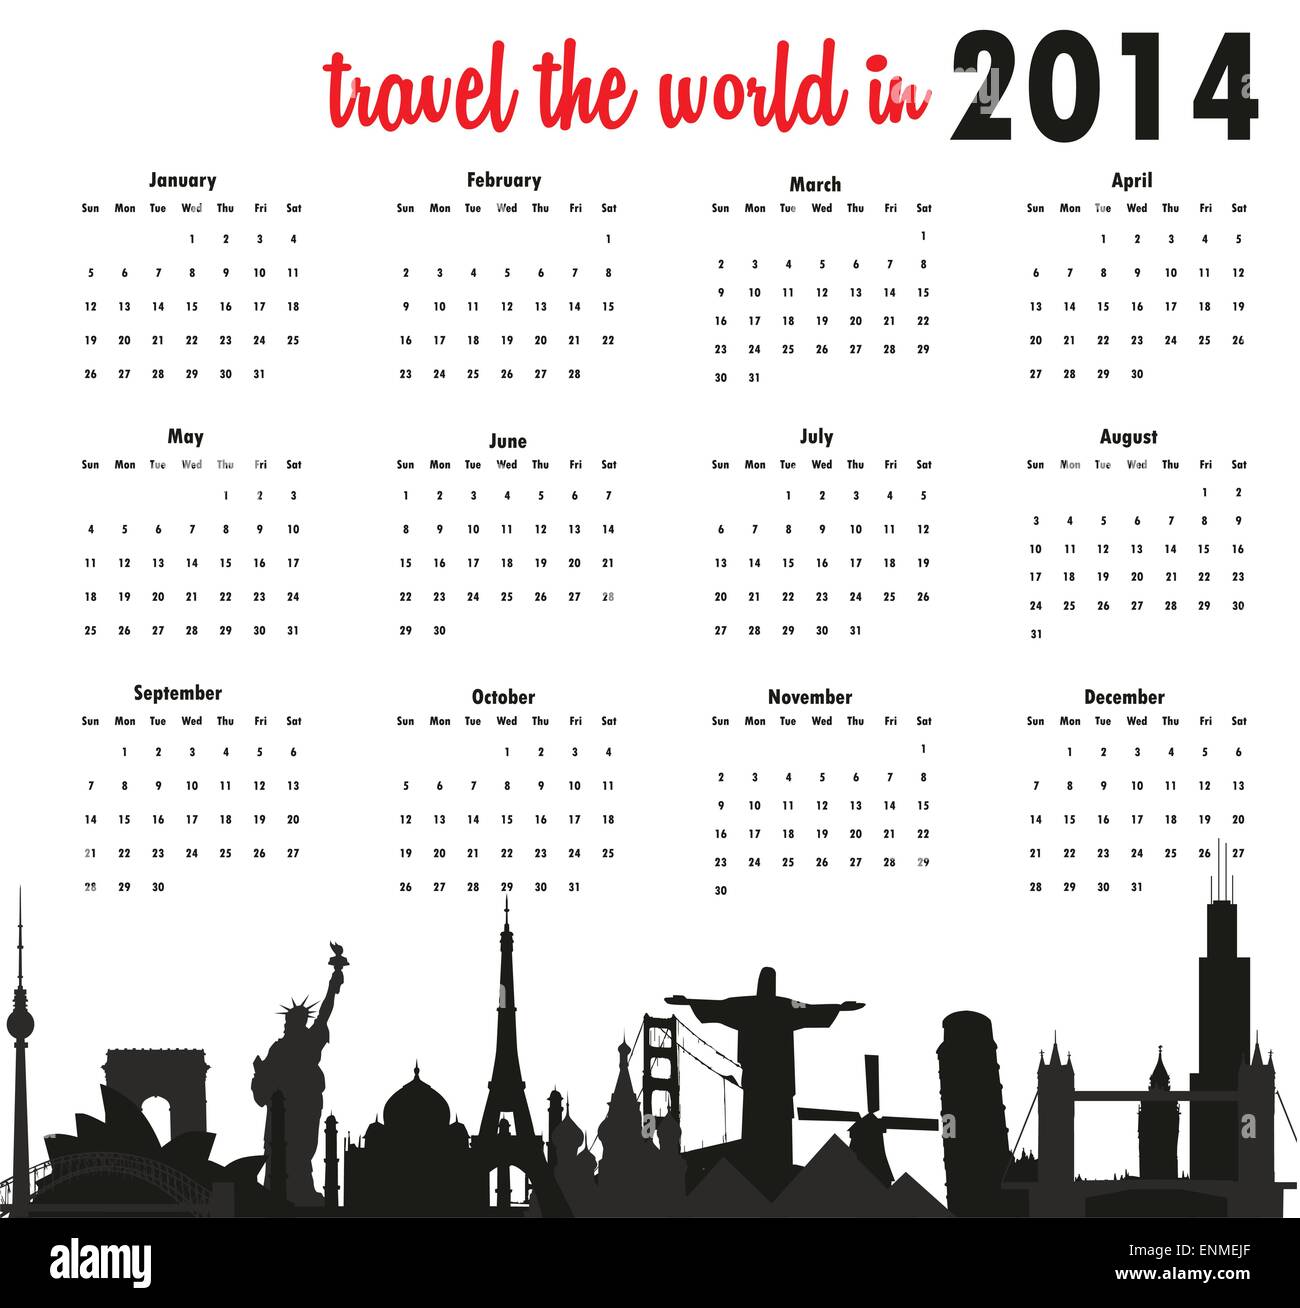 Travel the world in 2014 calendar Stock Vector